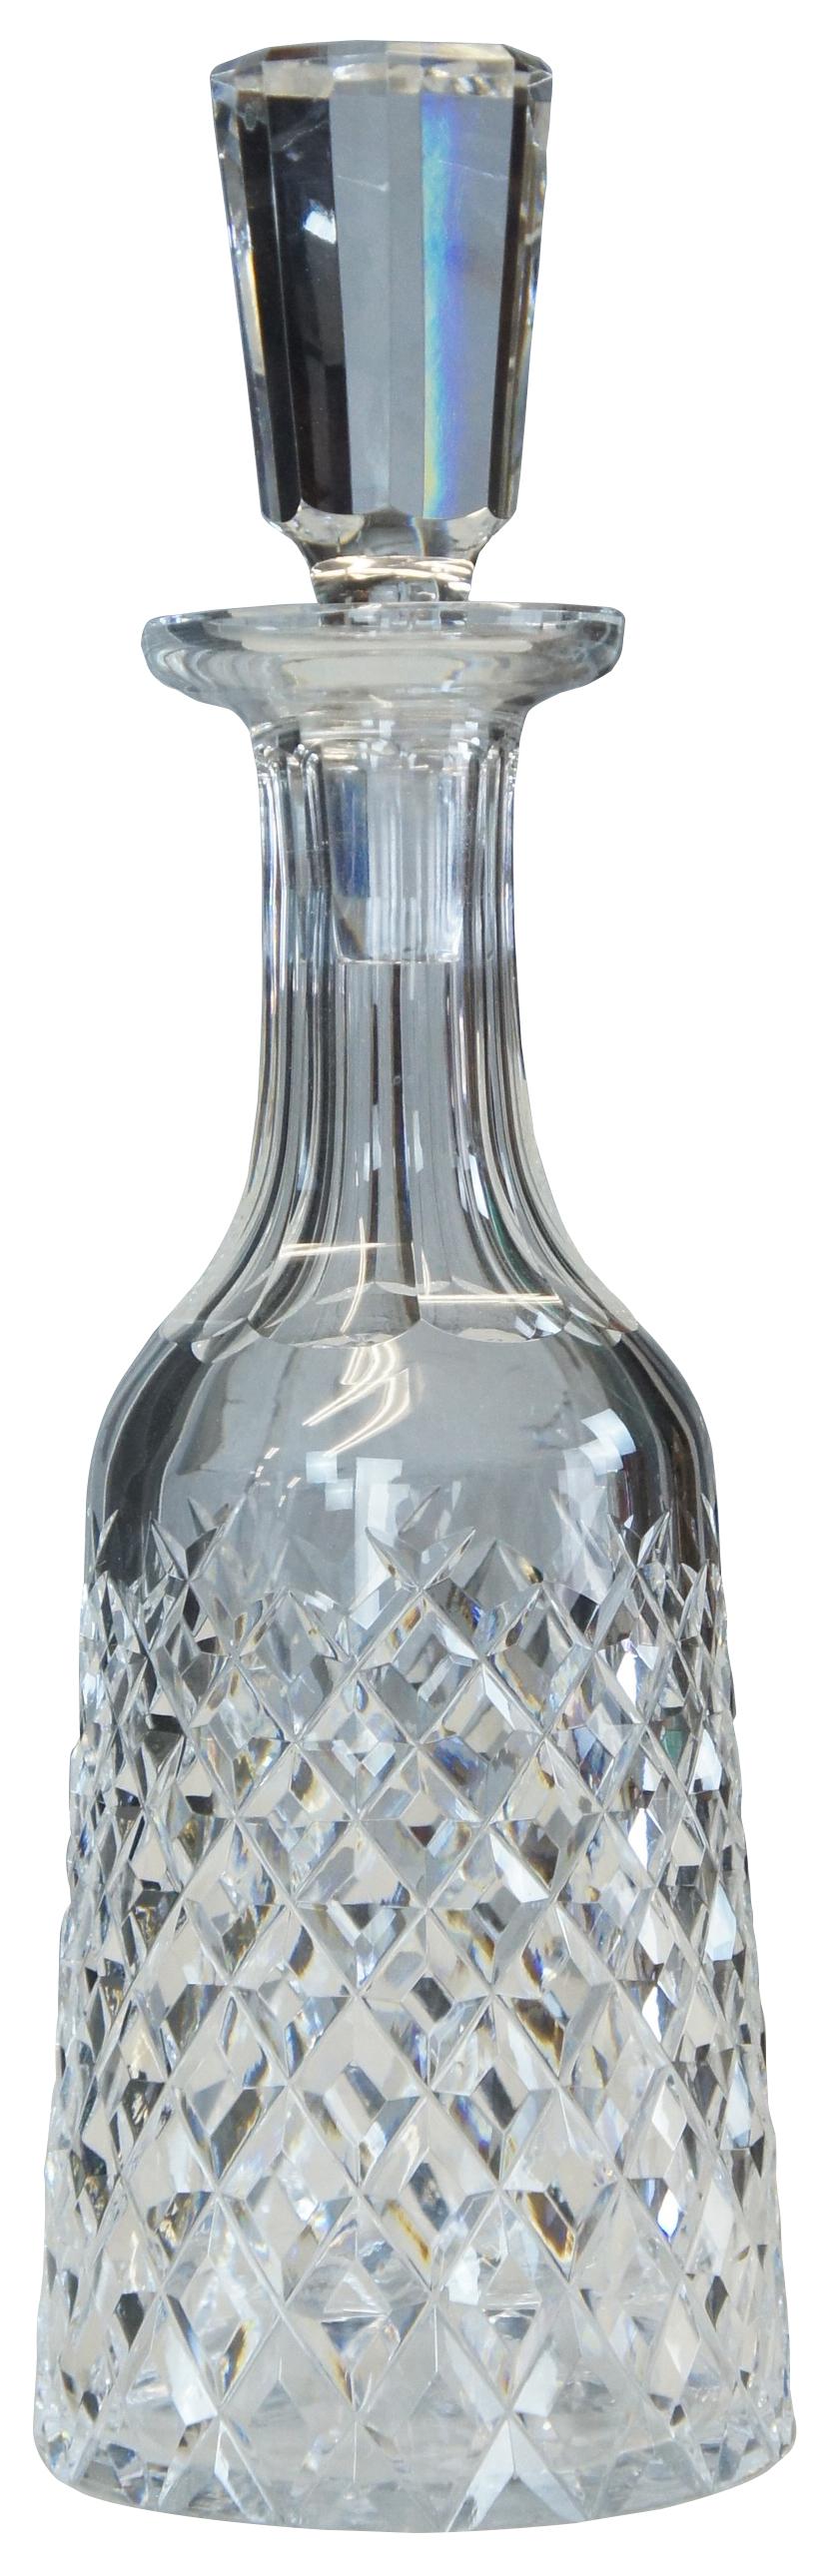 Vintage Waterford crystal Alana diamond pattern whiskey liquor decanter.
   